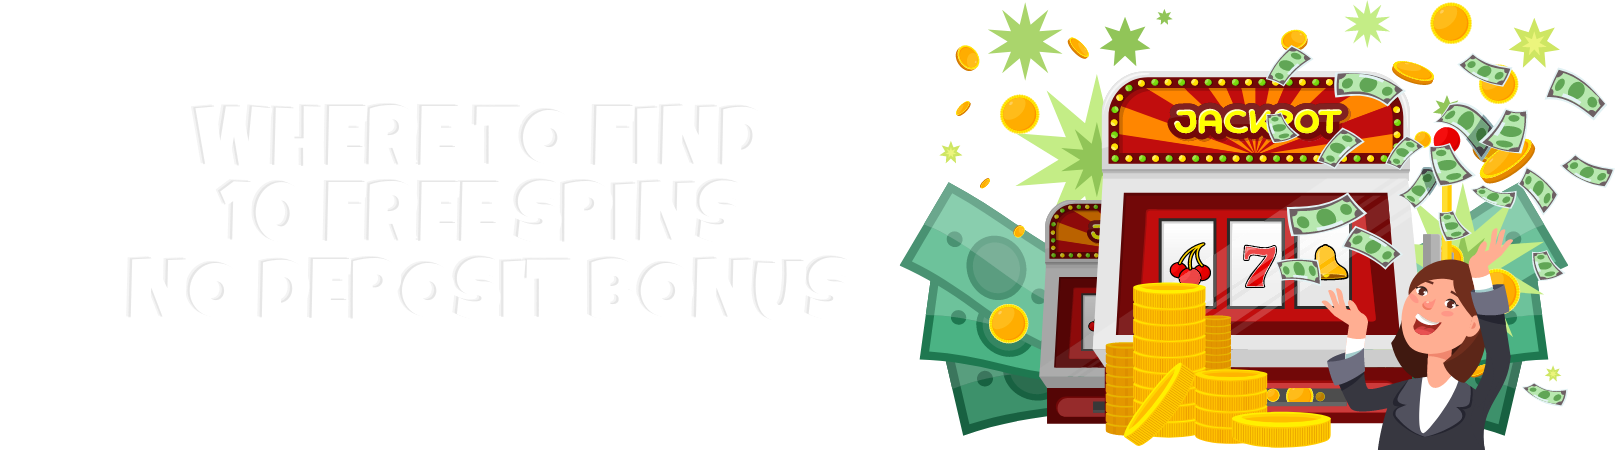 Where to Find 10 Free Spins No Deposit Bonus img